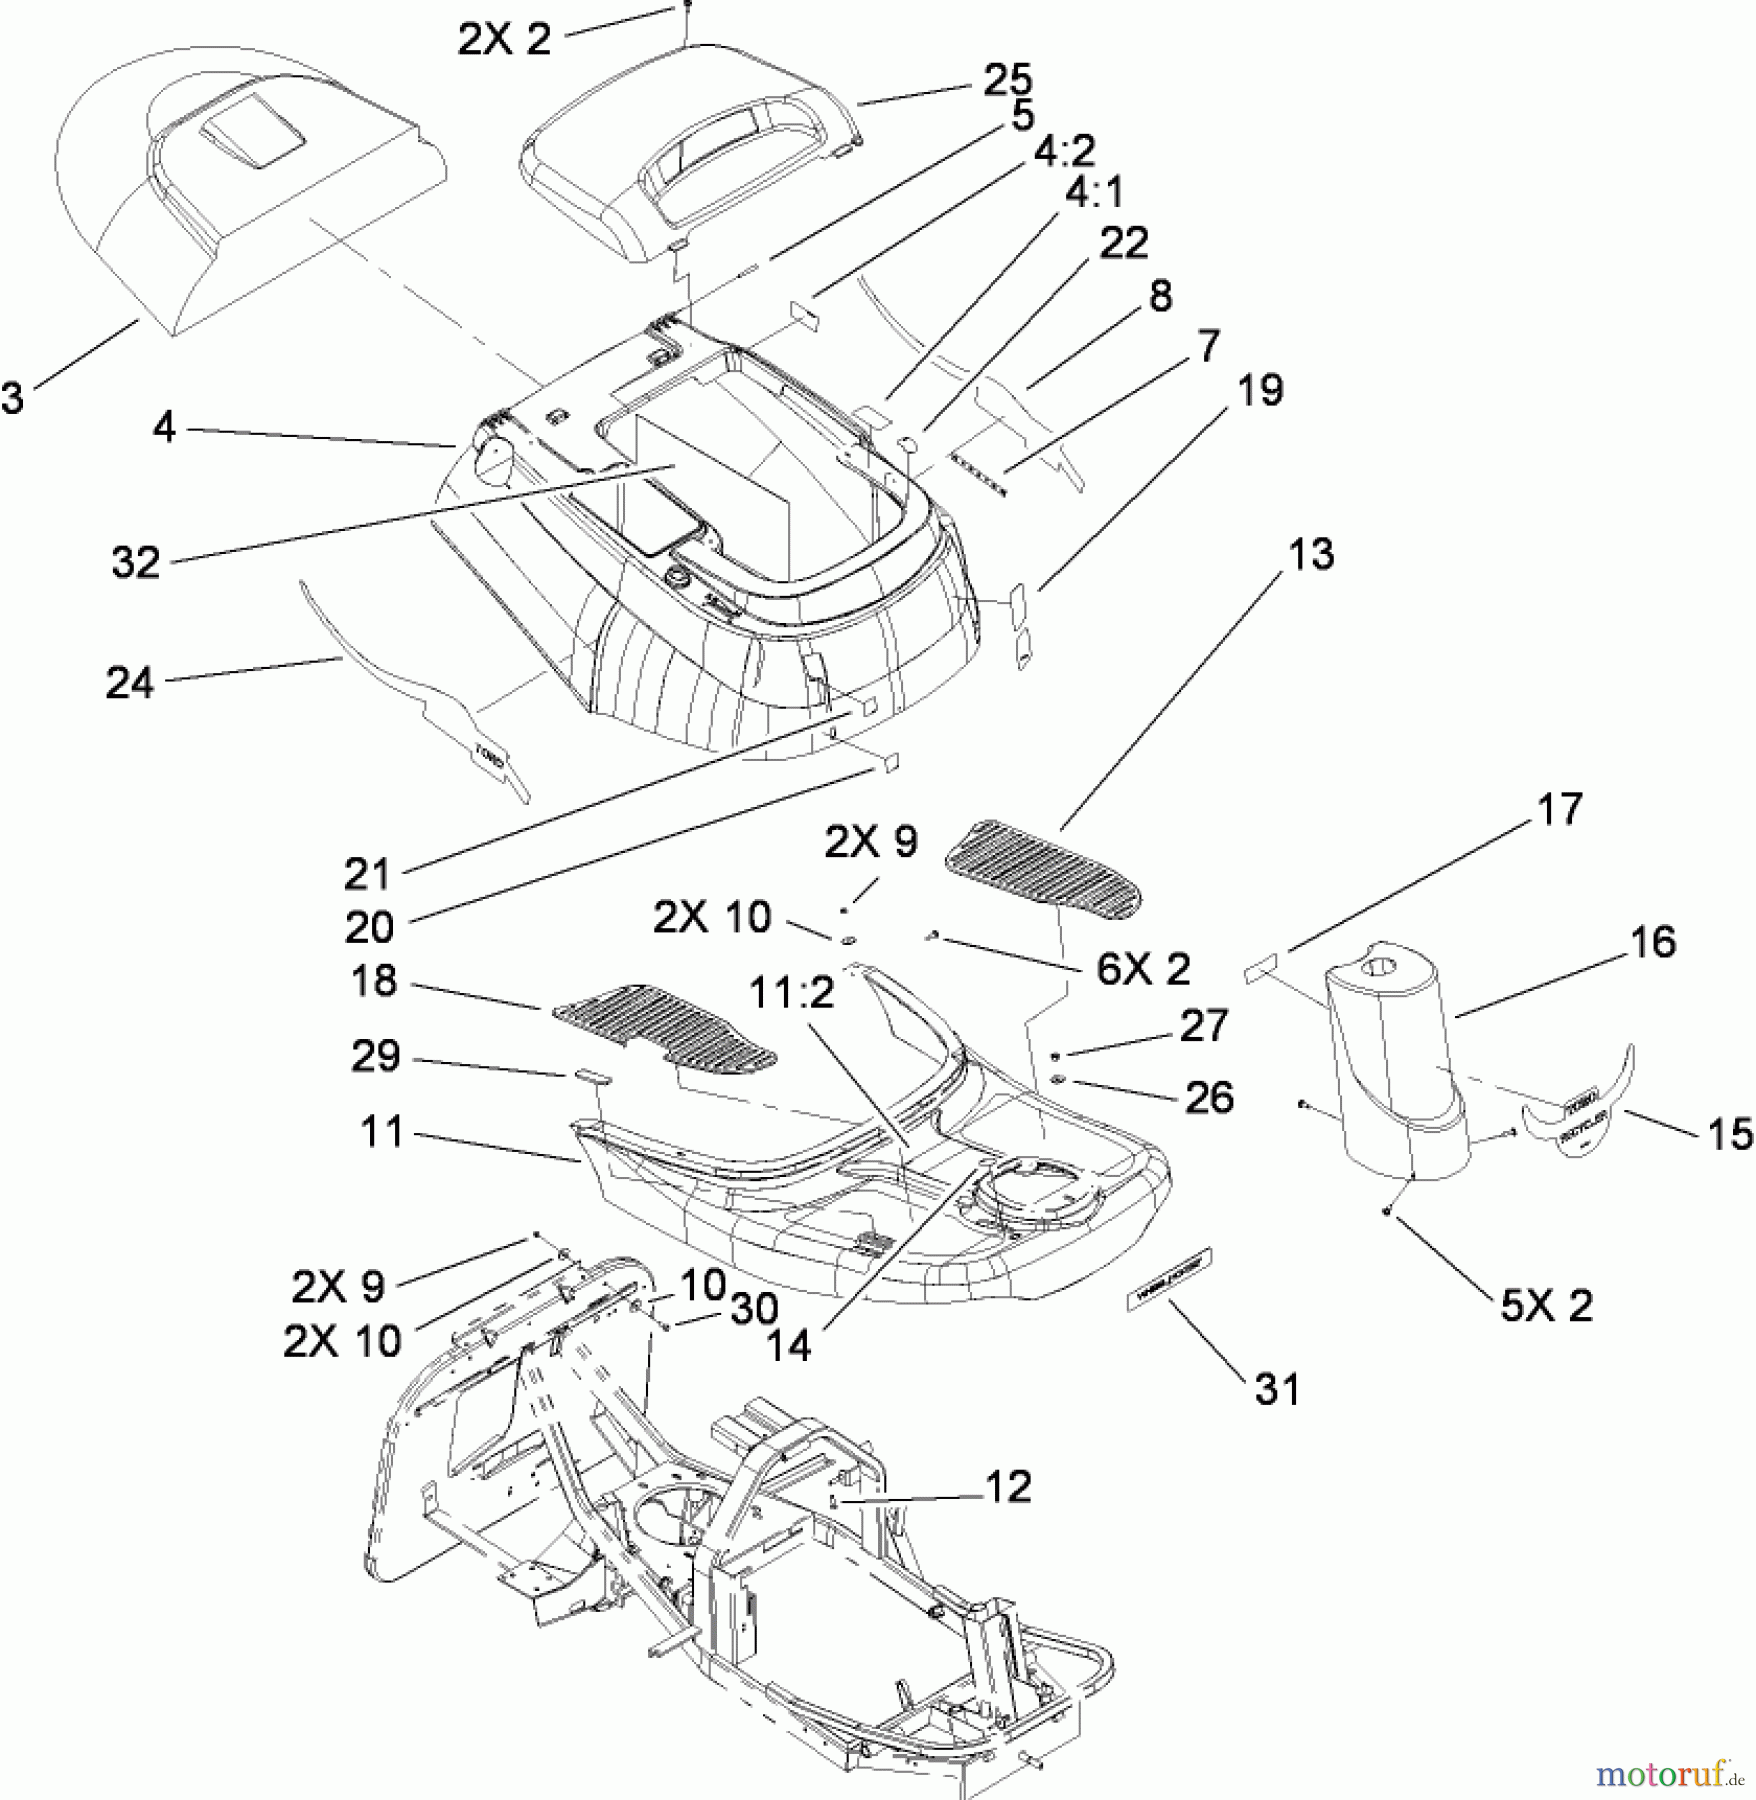  Toro Neu Mowers, Rear-Engine Rider 70185 (G132) - Toro G132 Rear-Engine Riding Mower, 2008 (270805706-280899564) BODY AND DECAL ASSEMBLY